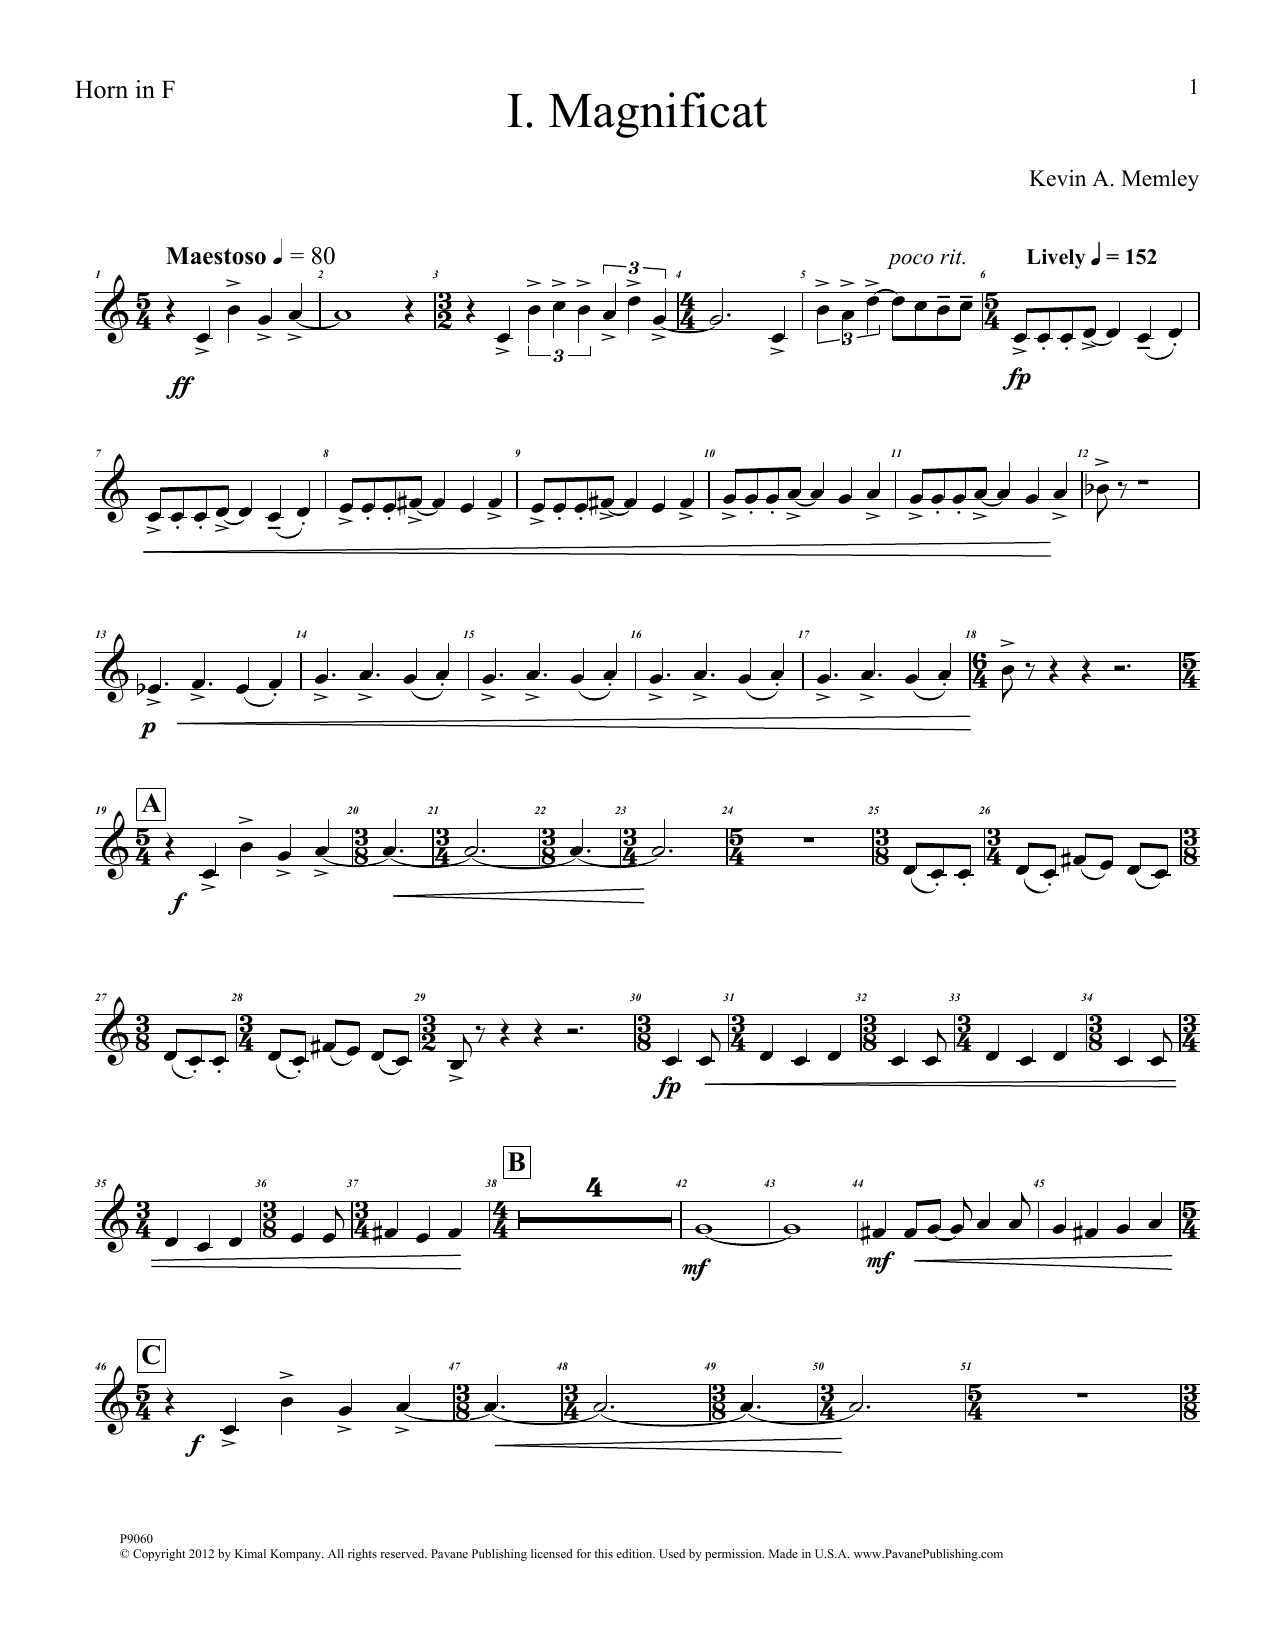 Download Kevin Memley Magnificat (Brass Quintet) (Parts) - Ho Sheet Music